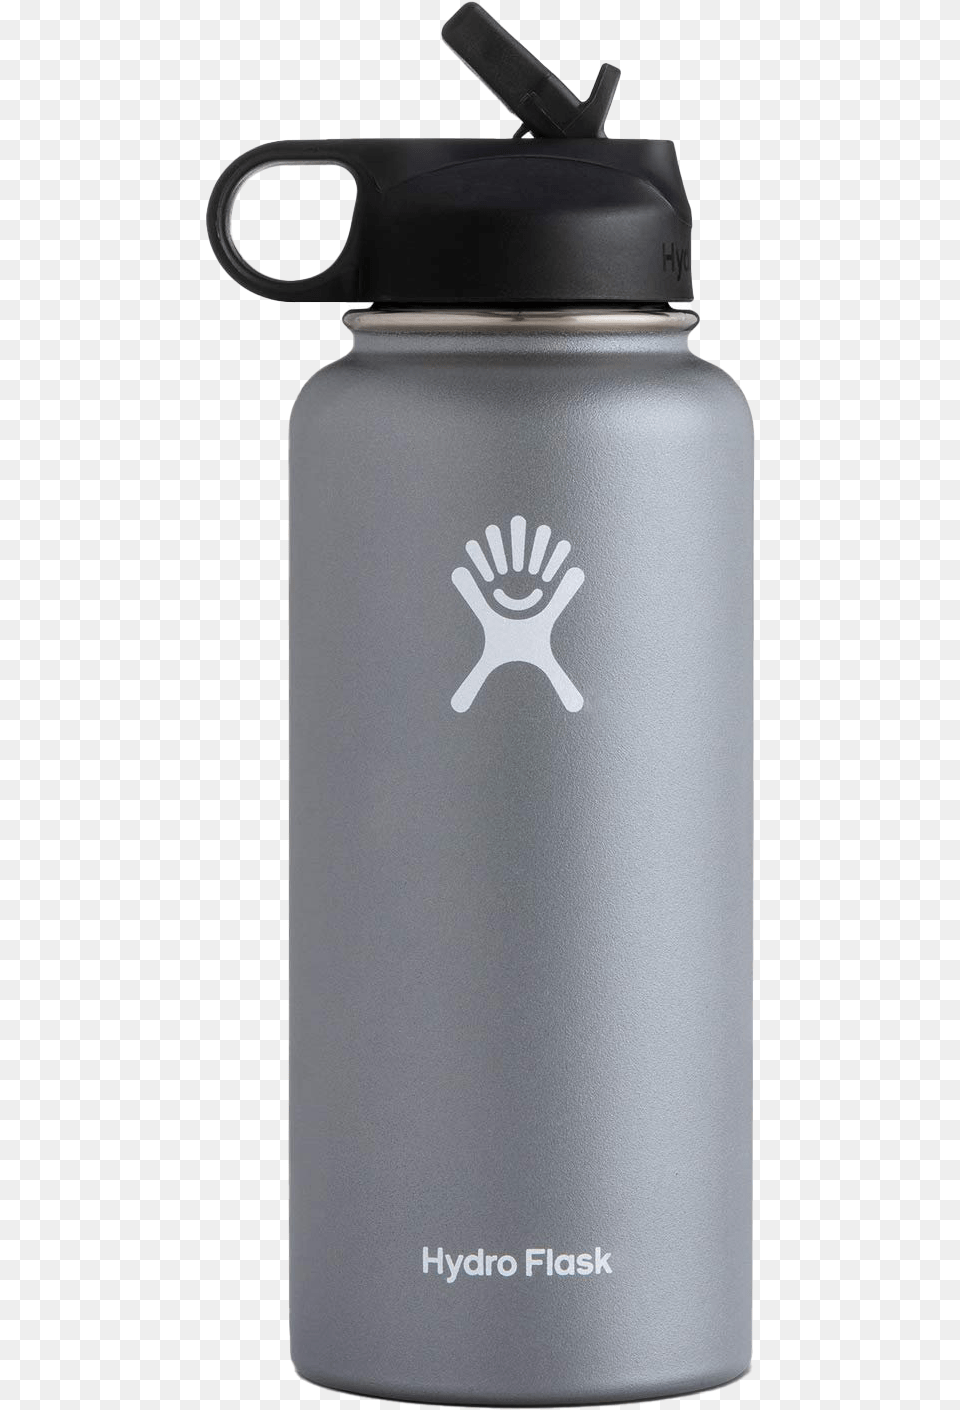 Hydro Flask Free Download Hydro Flask Water Bottle, Water Bottle, Shaker Png Image